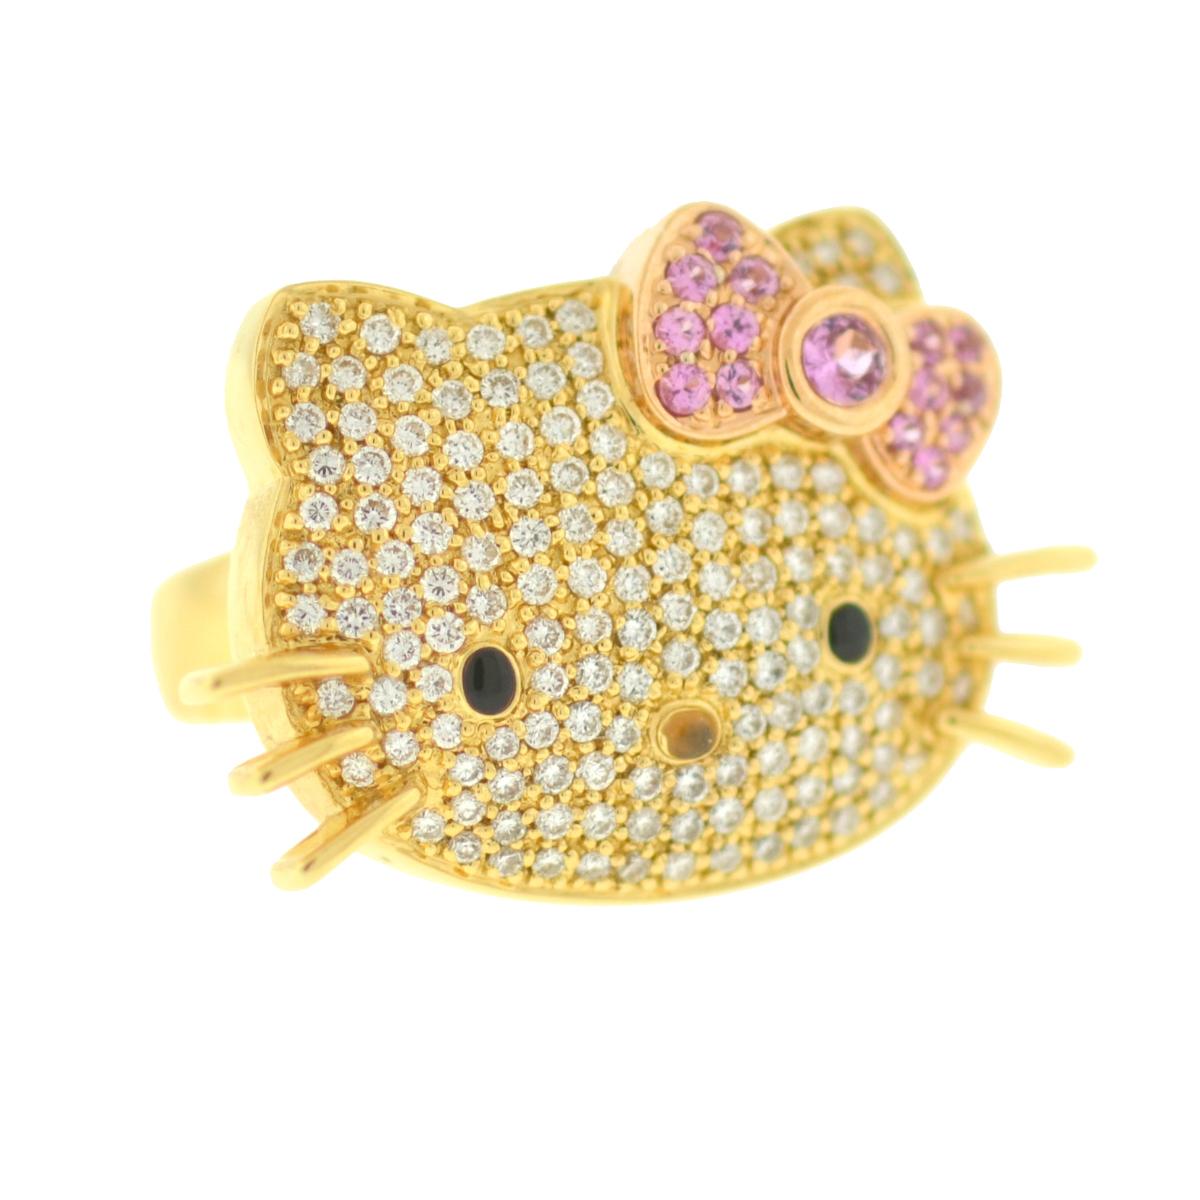 Company	Sanrio 
Style
Kimora Lee Simmons Sanrio Hello Kitty Ring
Metal
Size 	18k Yellow Gold (bow is rose gold) 
1